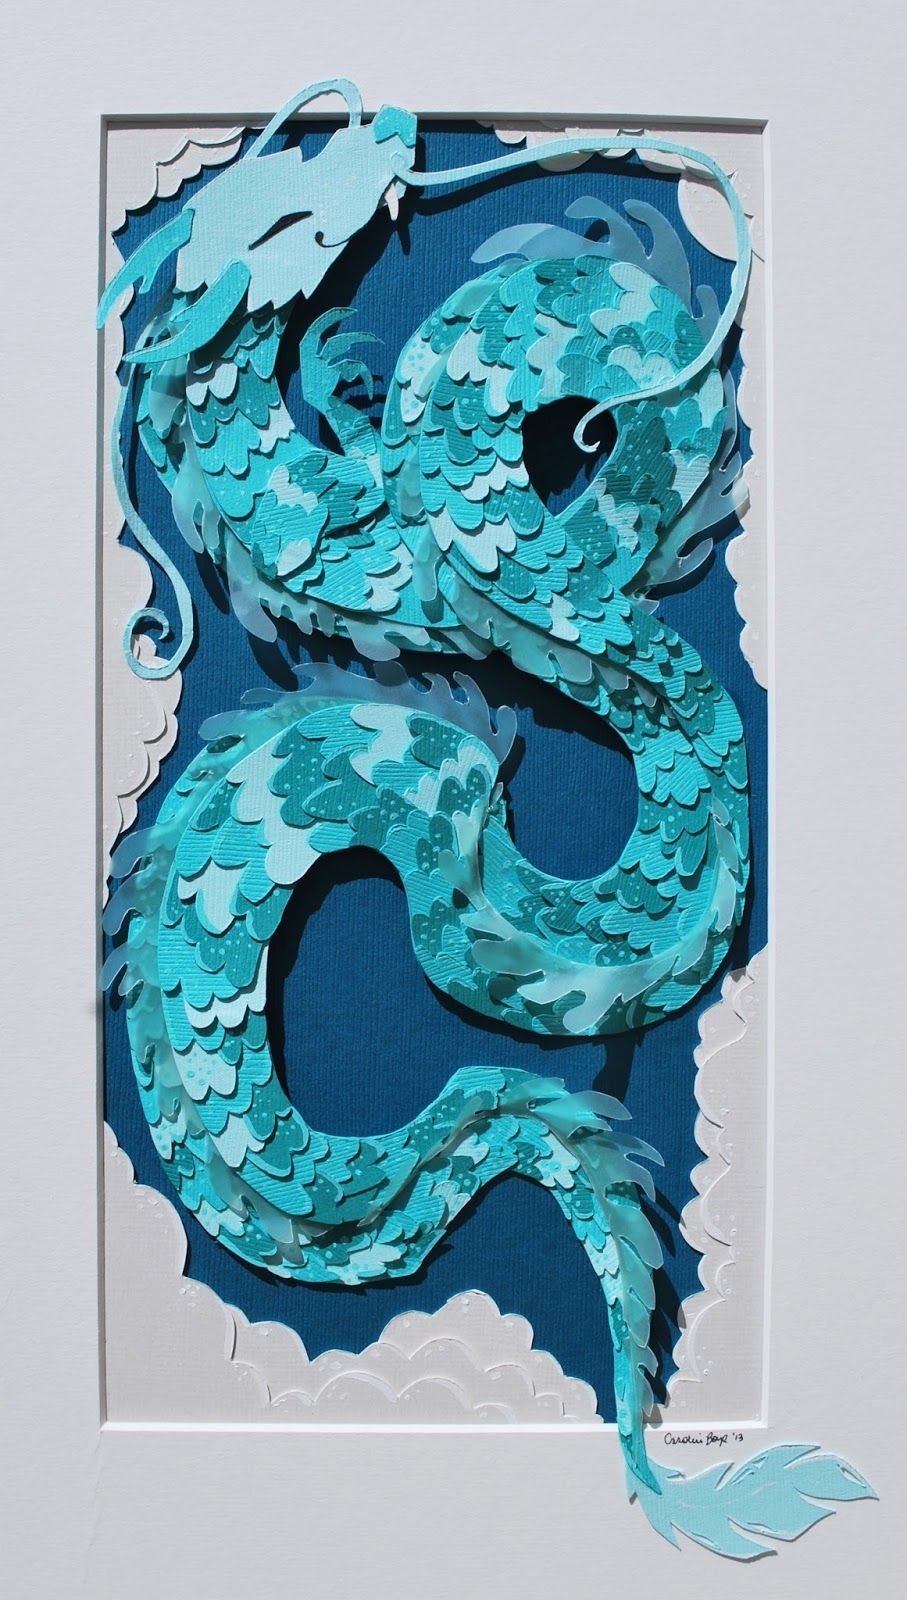 Chinese Dragon Papercraft Caroline Boyk S Blog Chinese Dragon Paper Pinterest